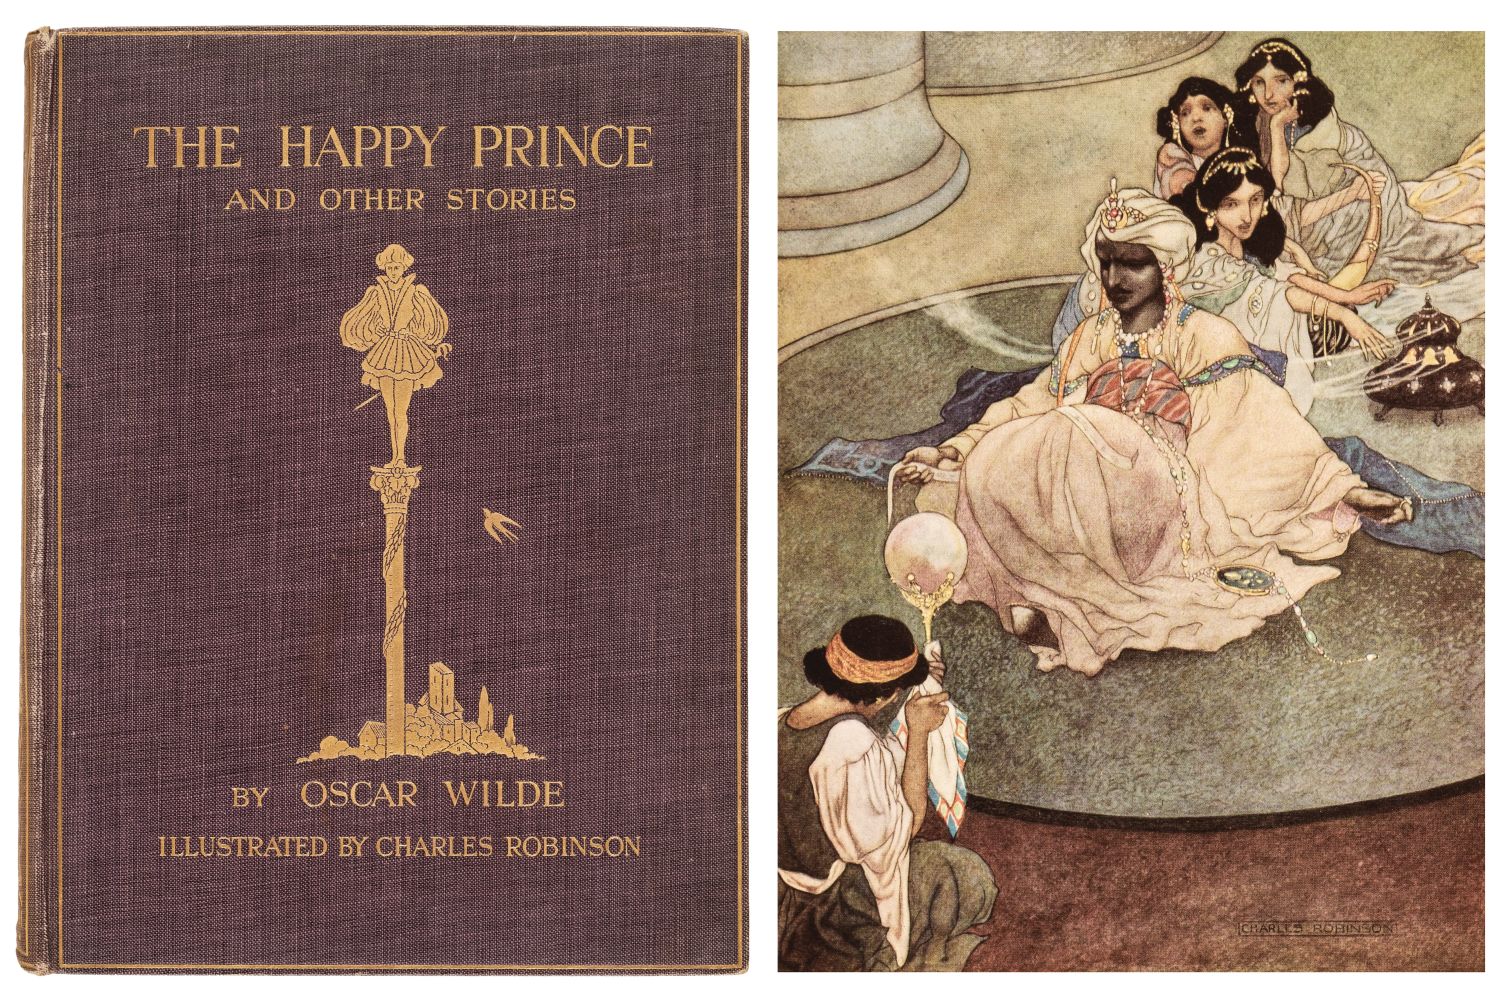 Robinson (Charles, illustrator). The Happy Prince, 1913